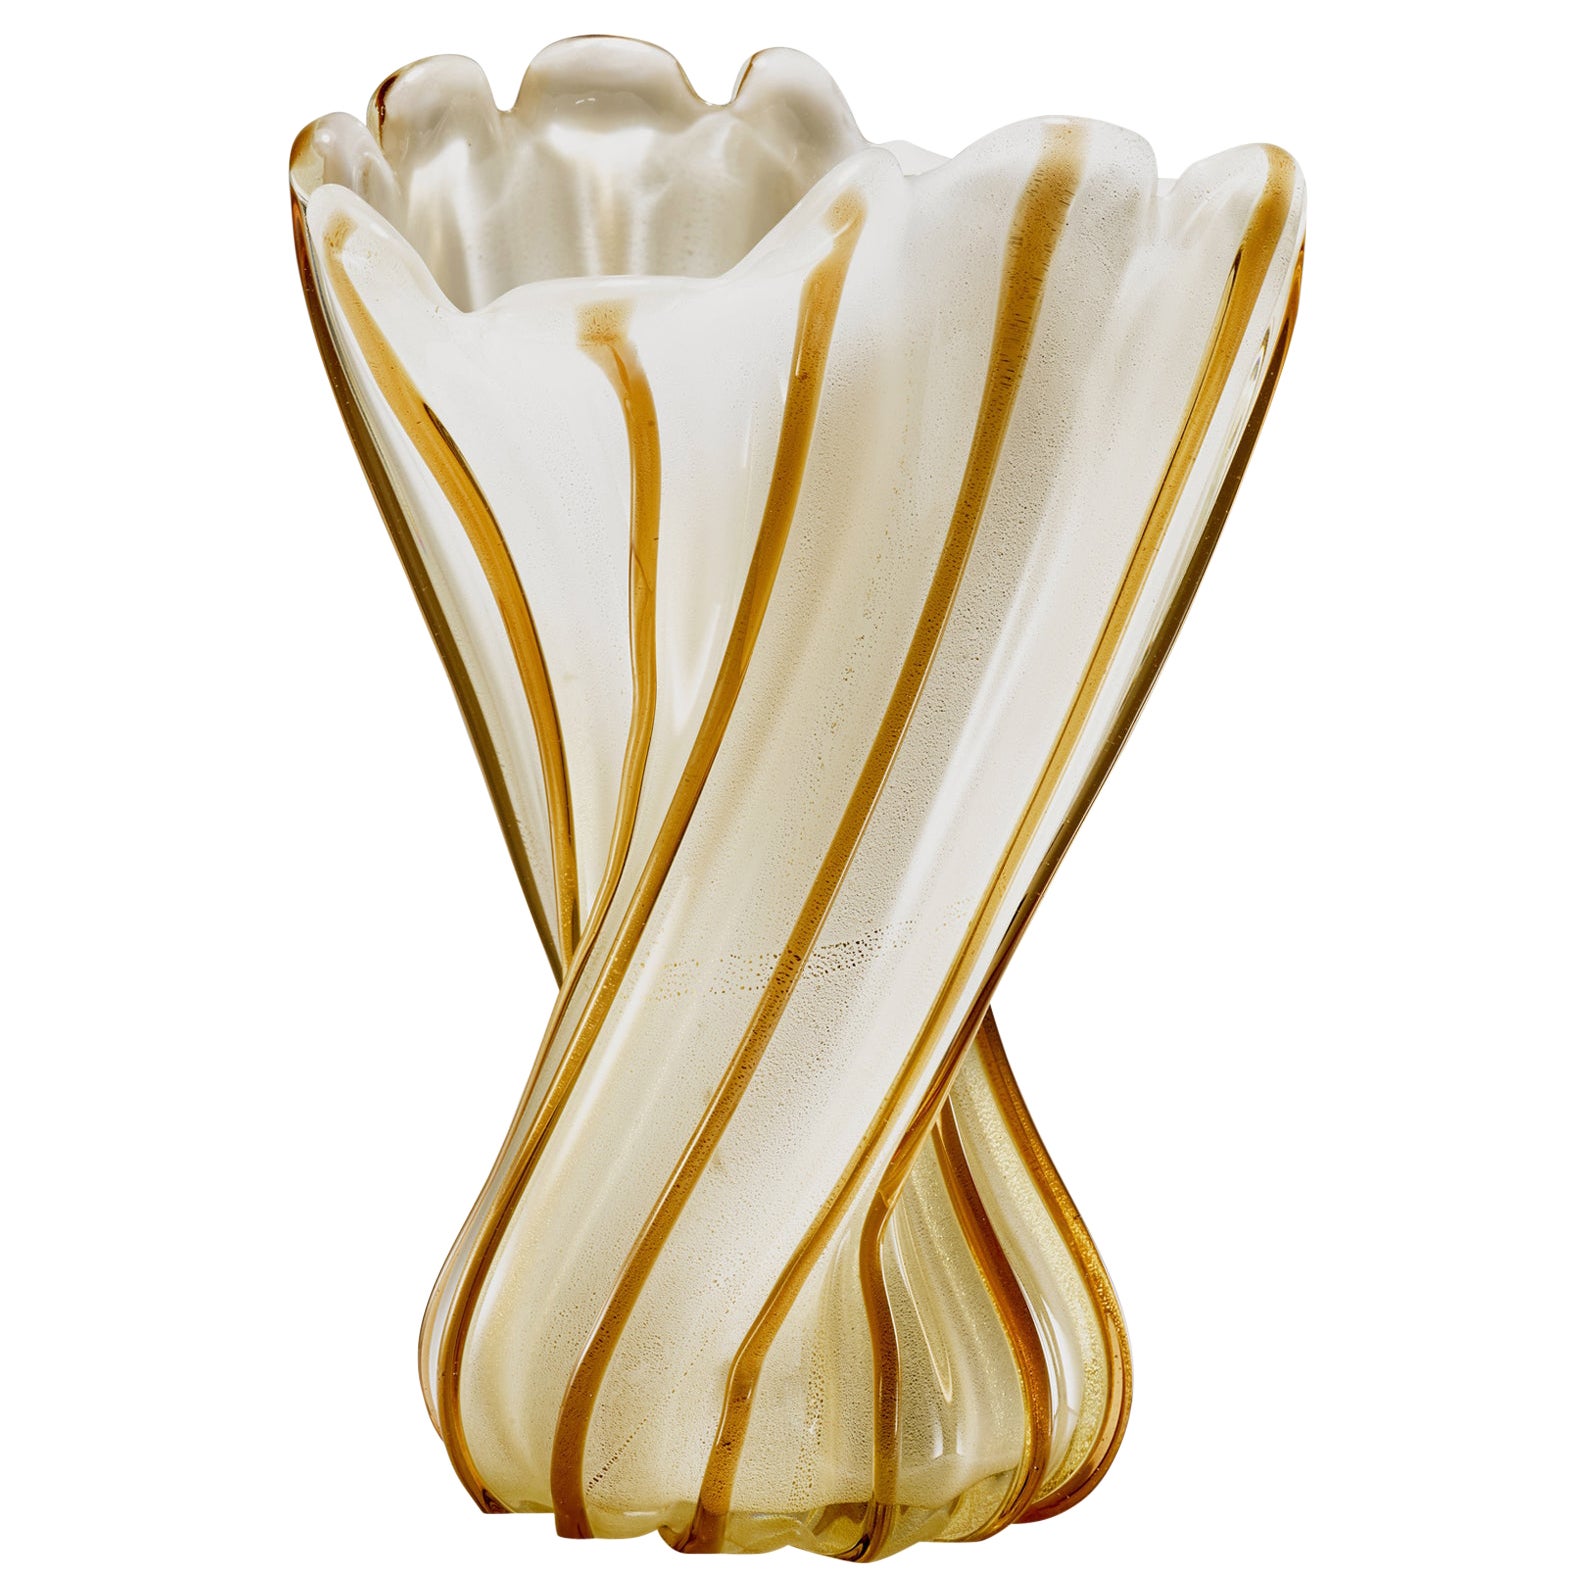 Ritorto-Vase mit Blattgold von Archimede Seguso, Murano, 1955